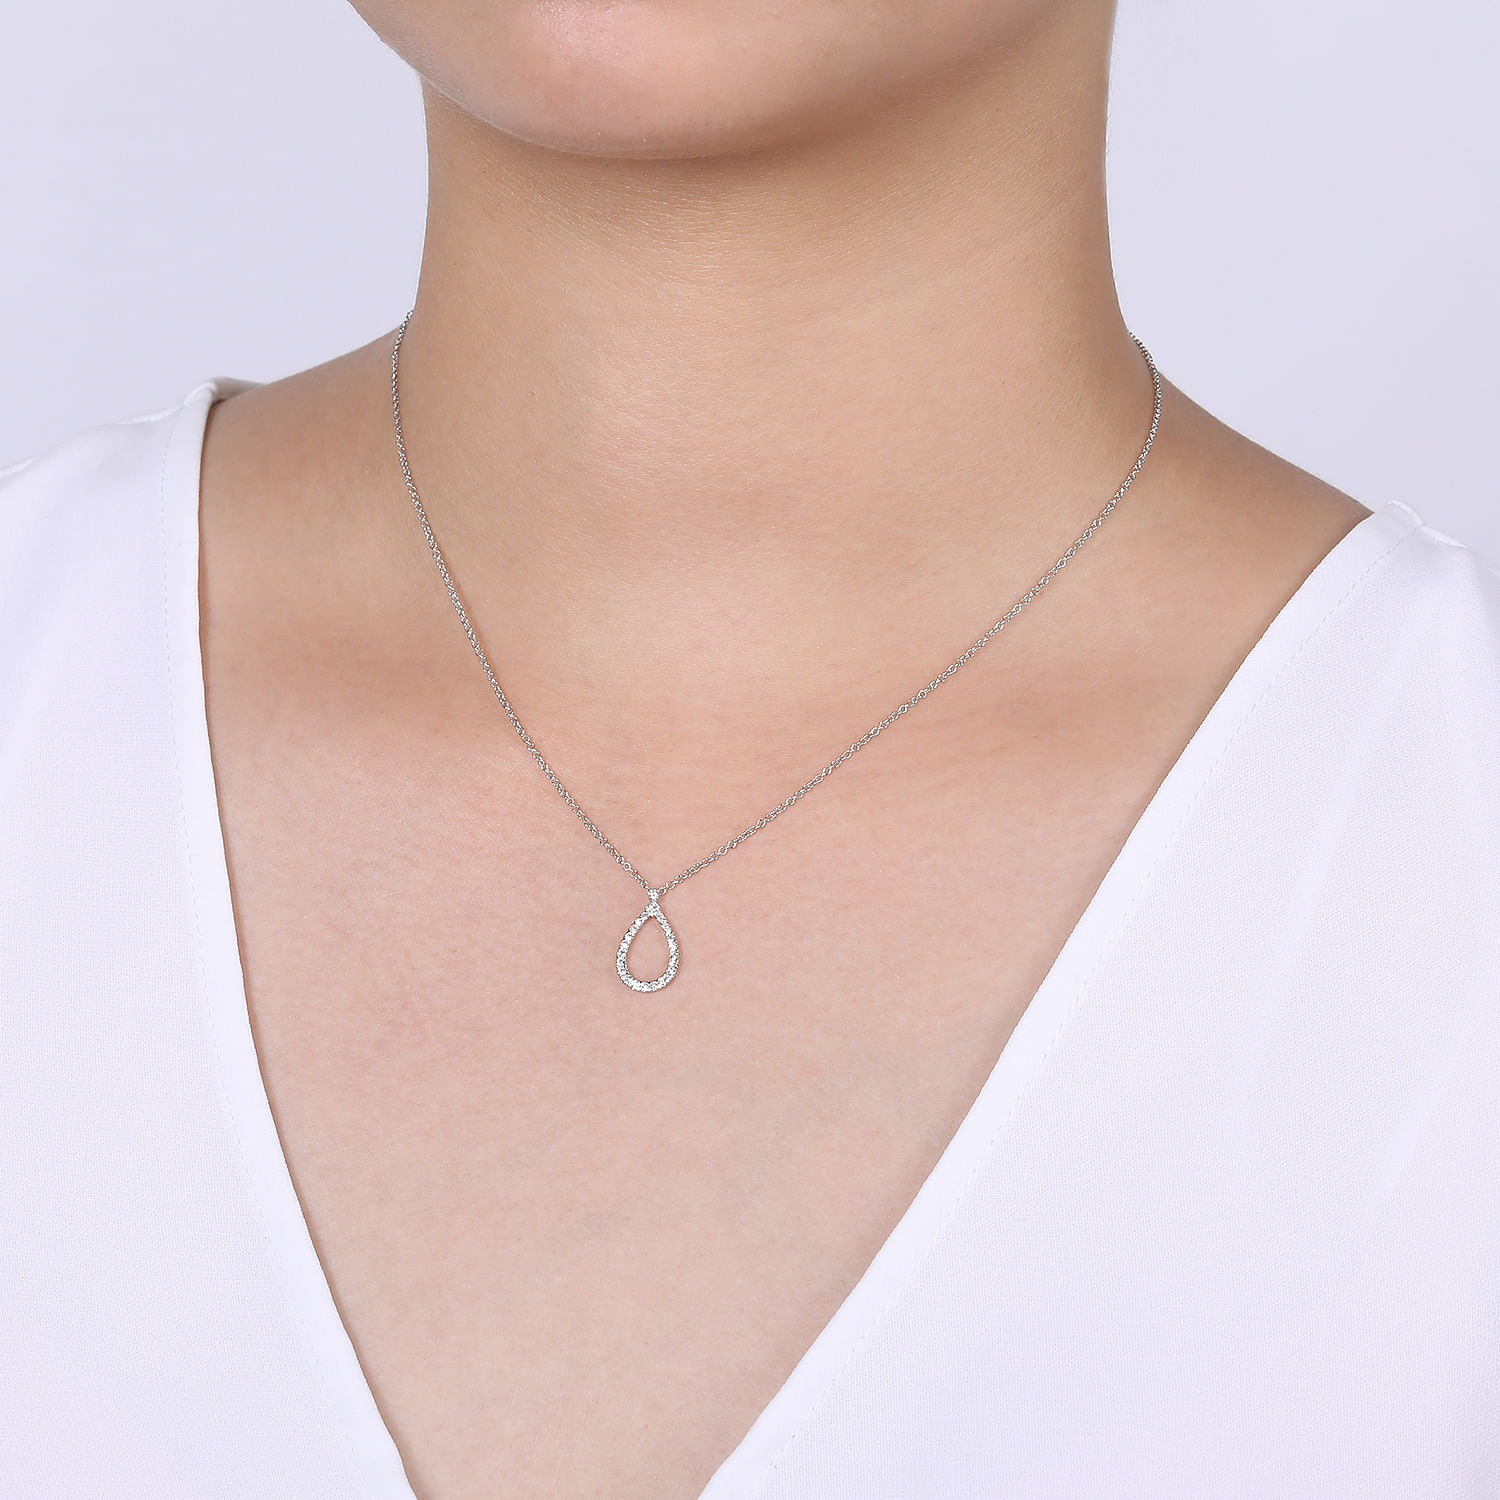 14K White Gold Teardrop Diamond Pendant Necklace